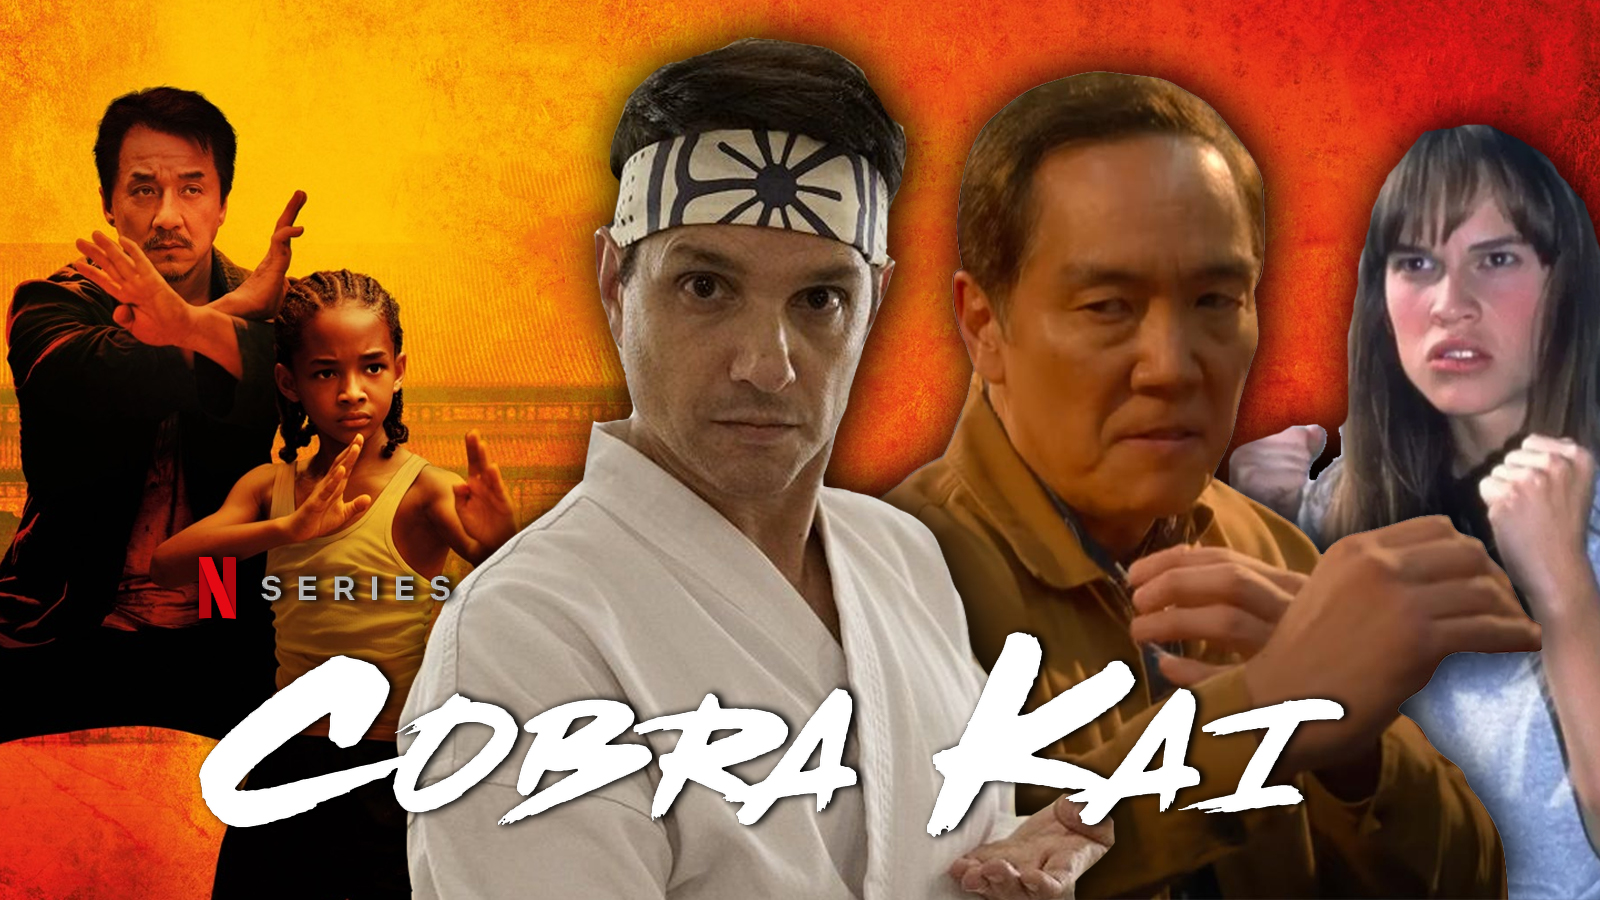 Cobra Kai Season 5 Ending, Tournament and Fights Explained by Creators